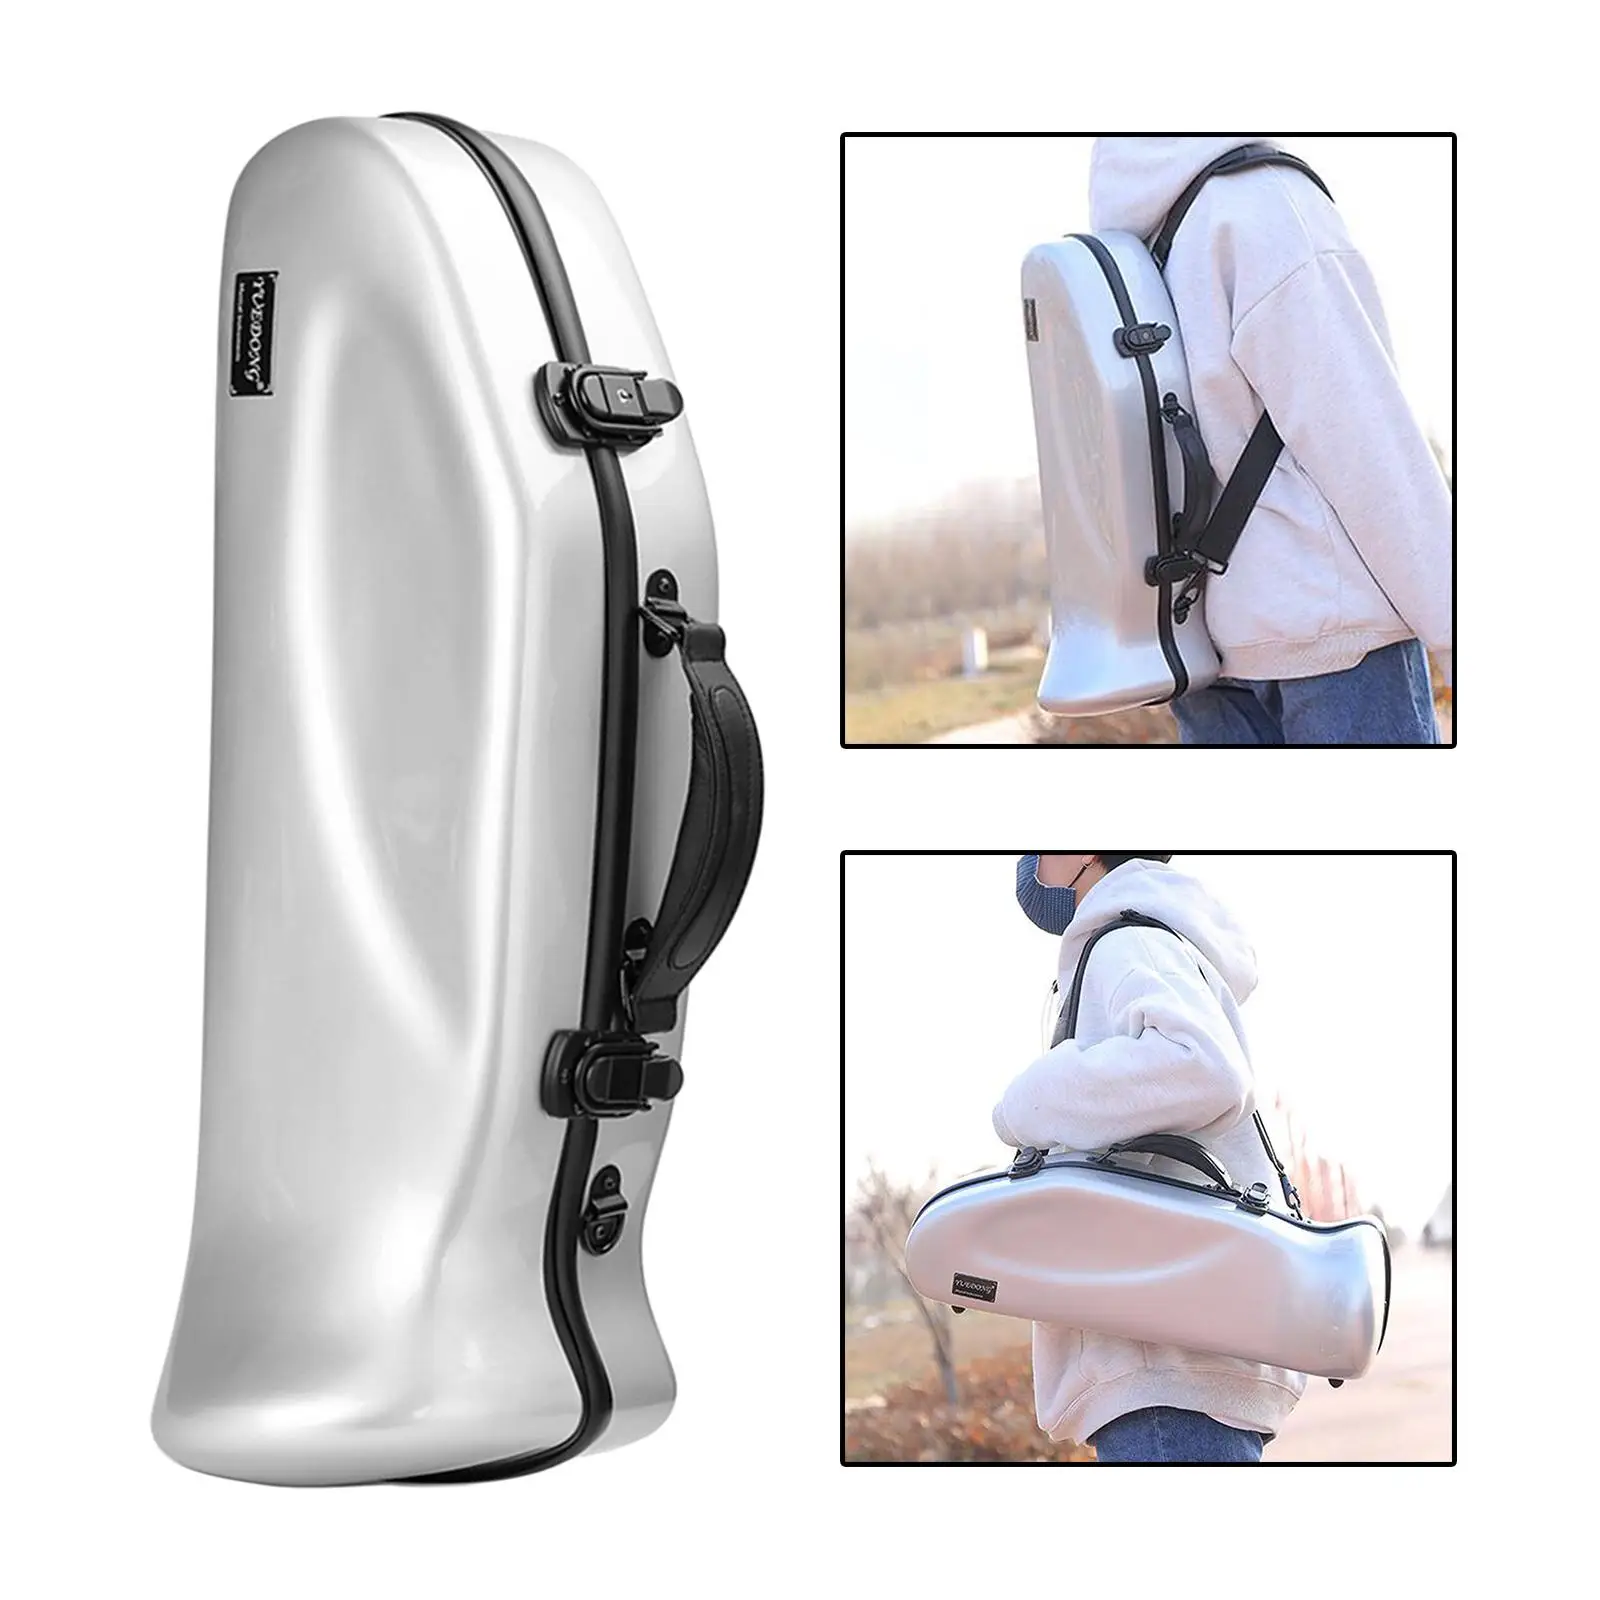 Trumpet Case Adjustable Carbon Fiber Carrying Case Portable Wind Instrument Case